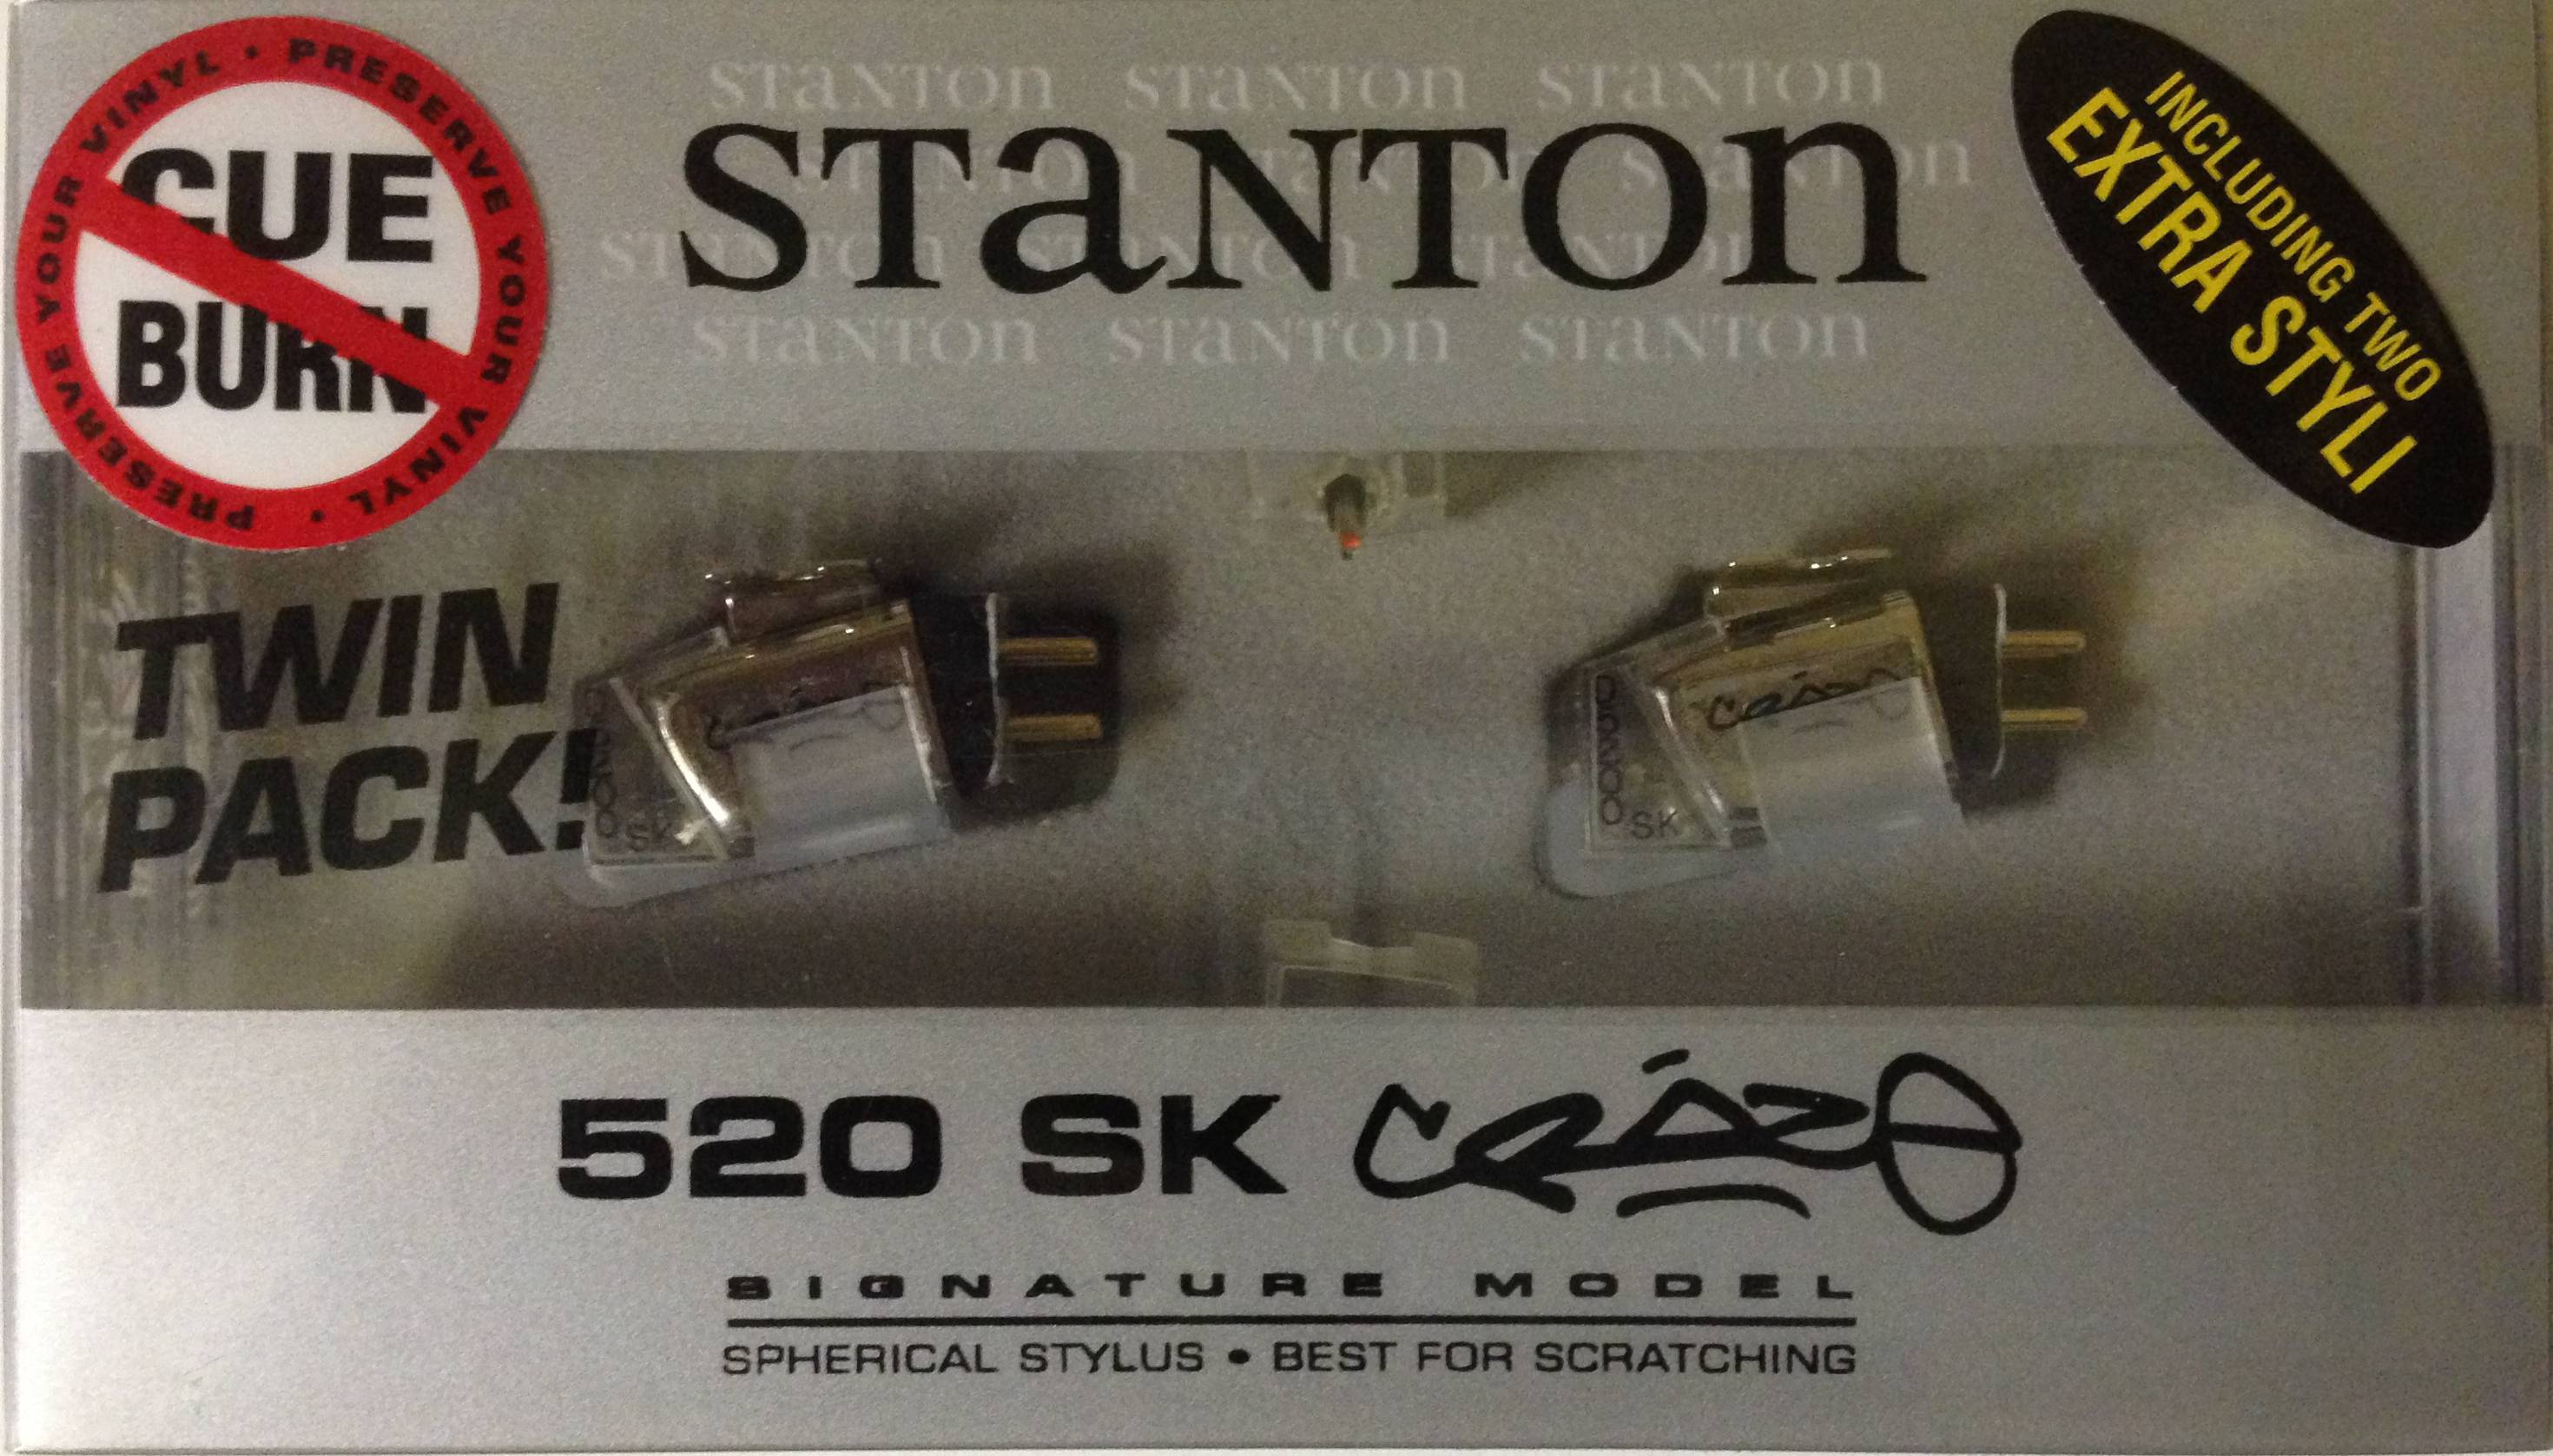 Stanton 520 SK